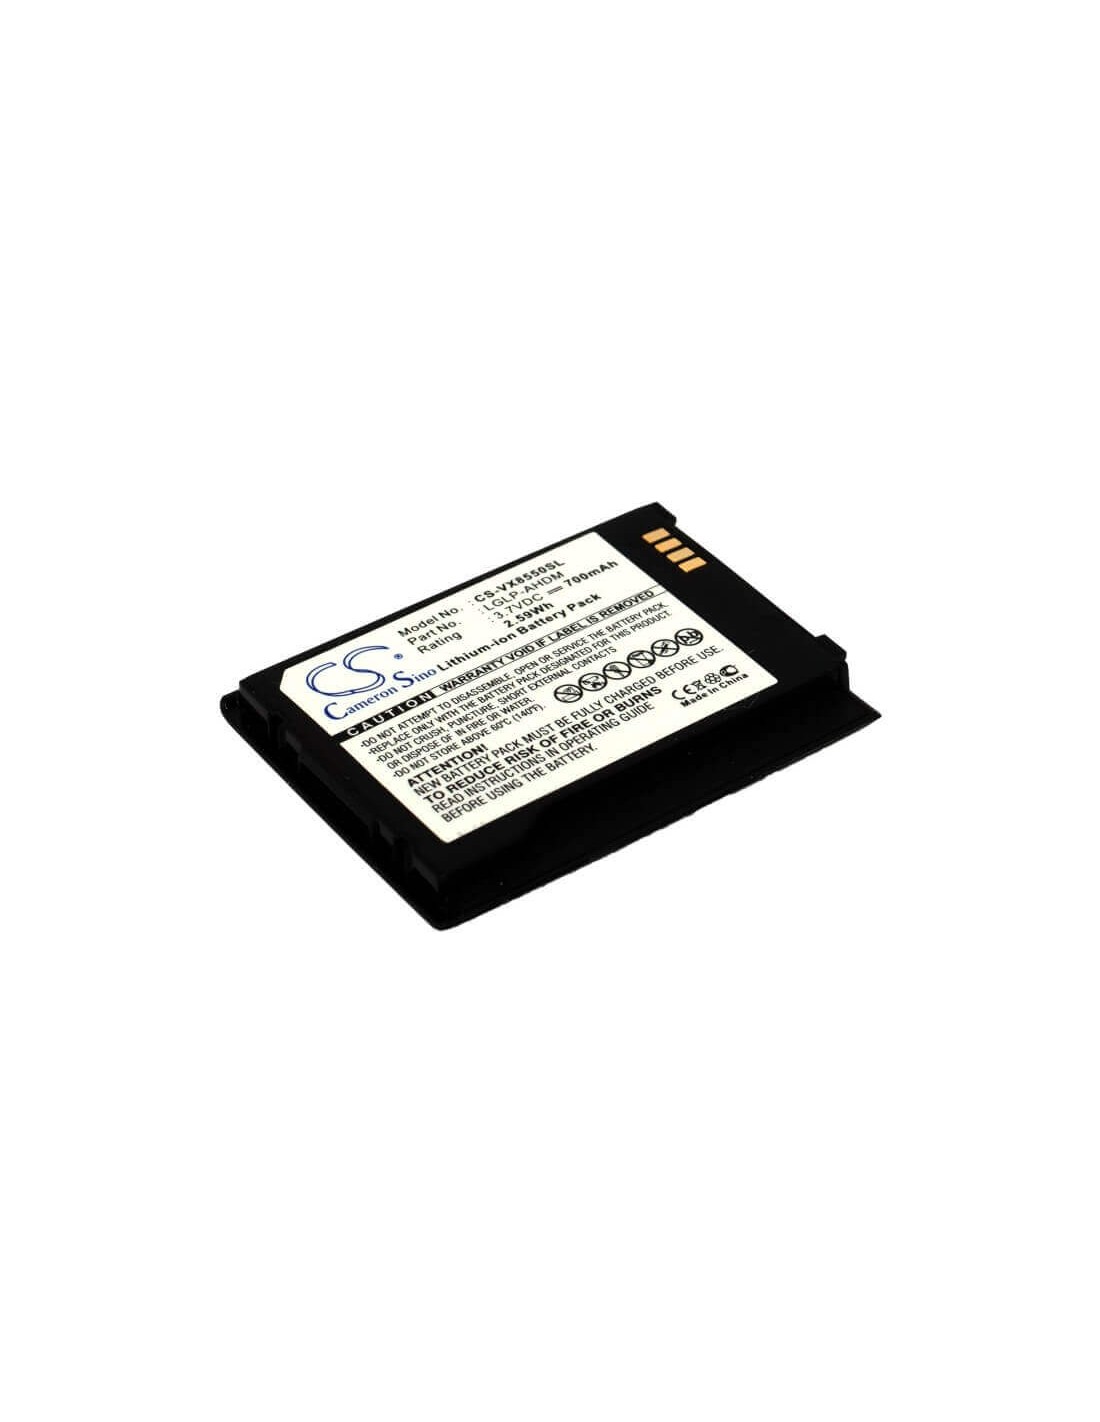 Battery for LG VX8550, VX-8550, VX-8550 Chocolate 3.7V, 700mAh - 2.59Wh